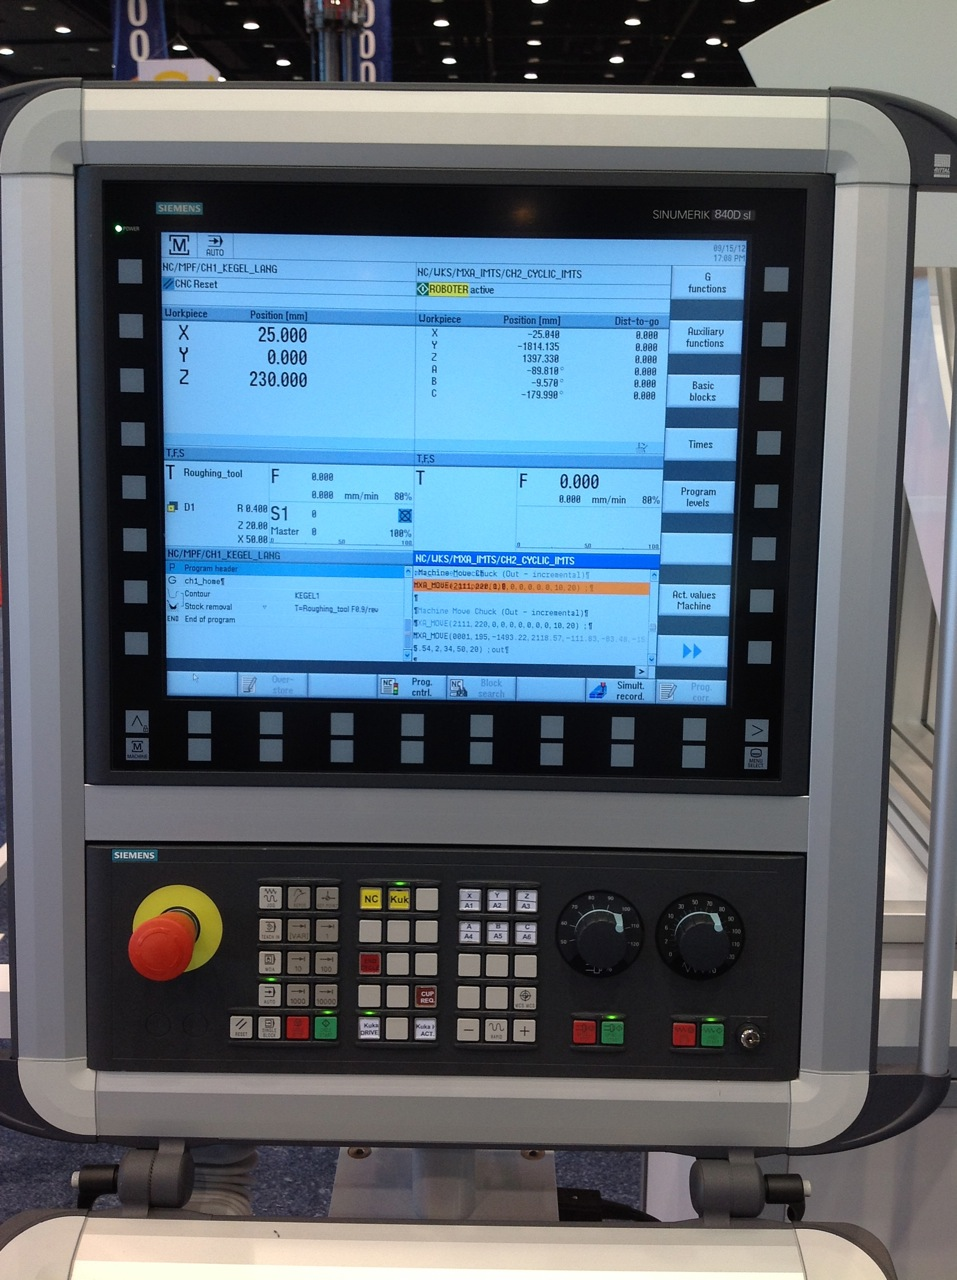 CNC machine tool's display screen